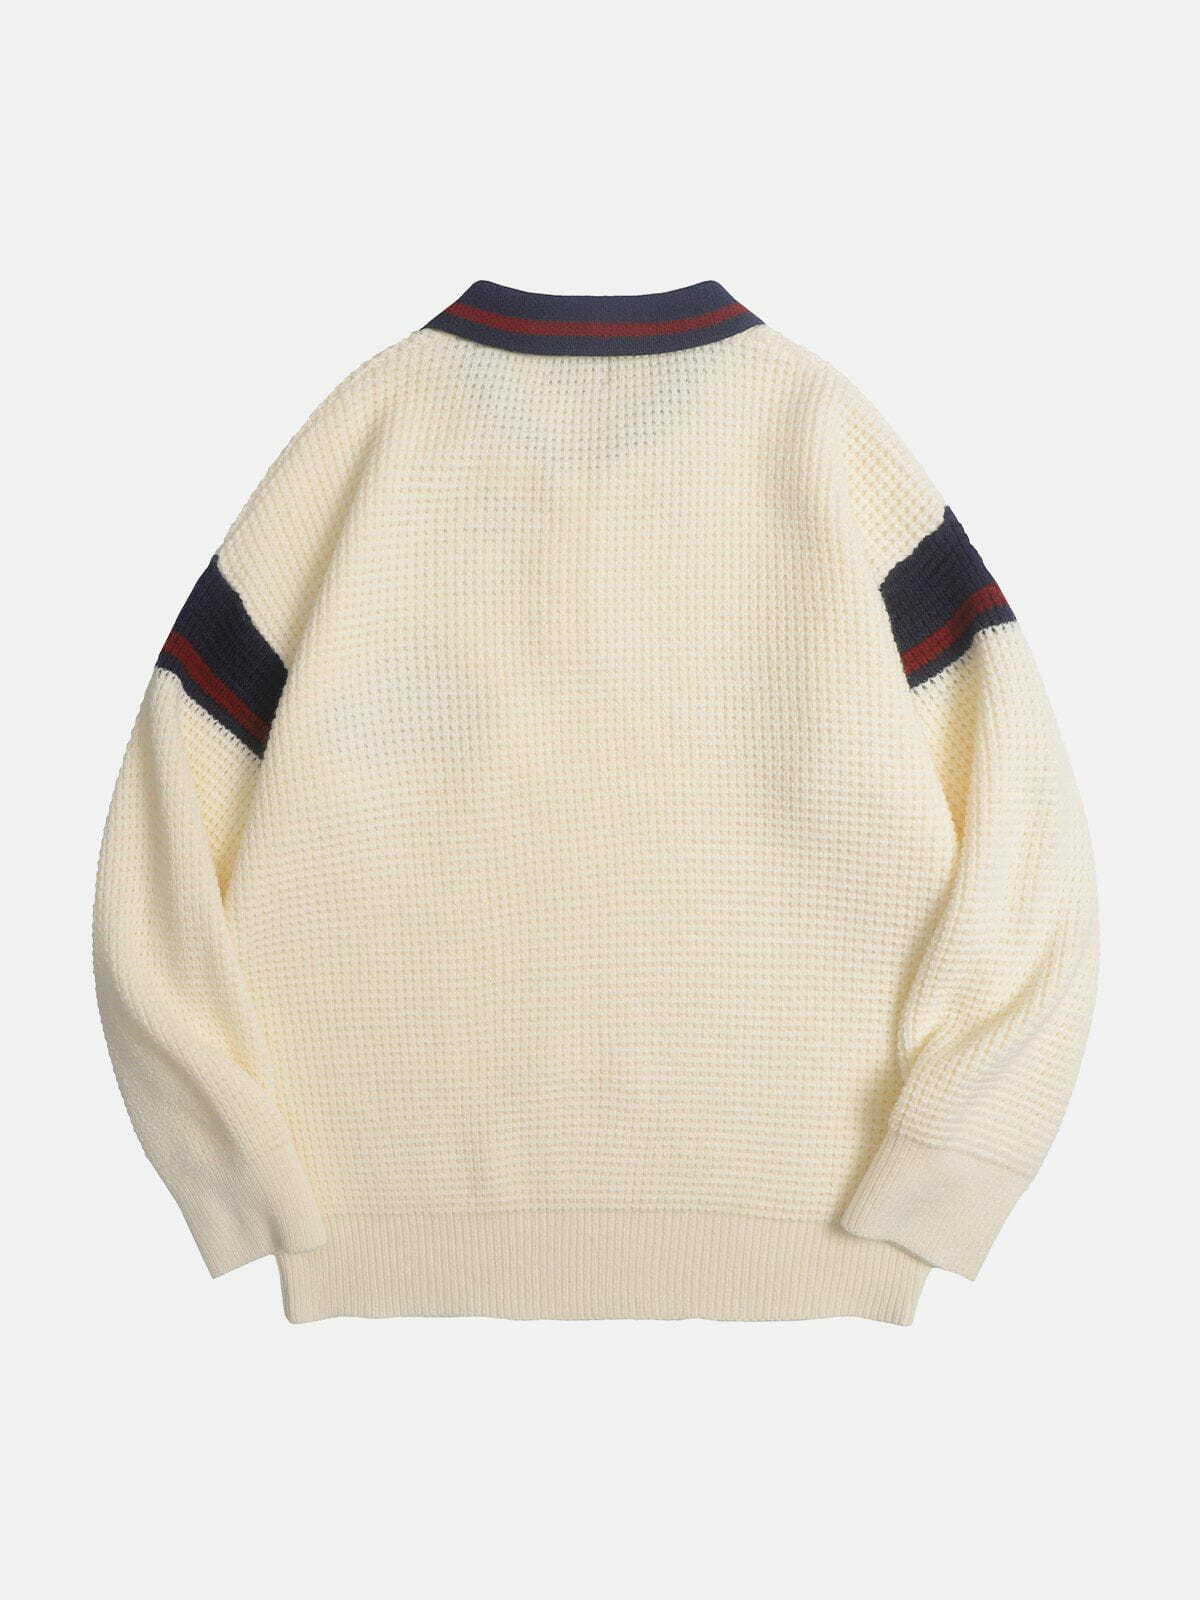 boutique vintage polo sweater retro cool & urban style 4474